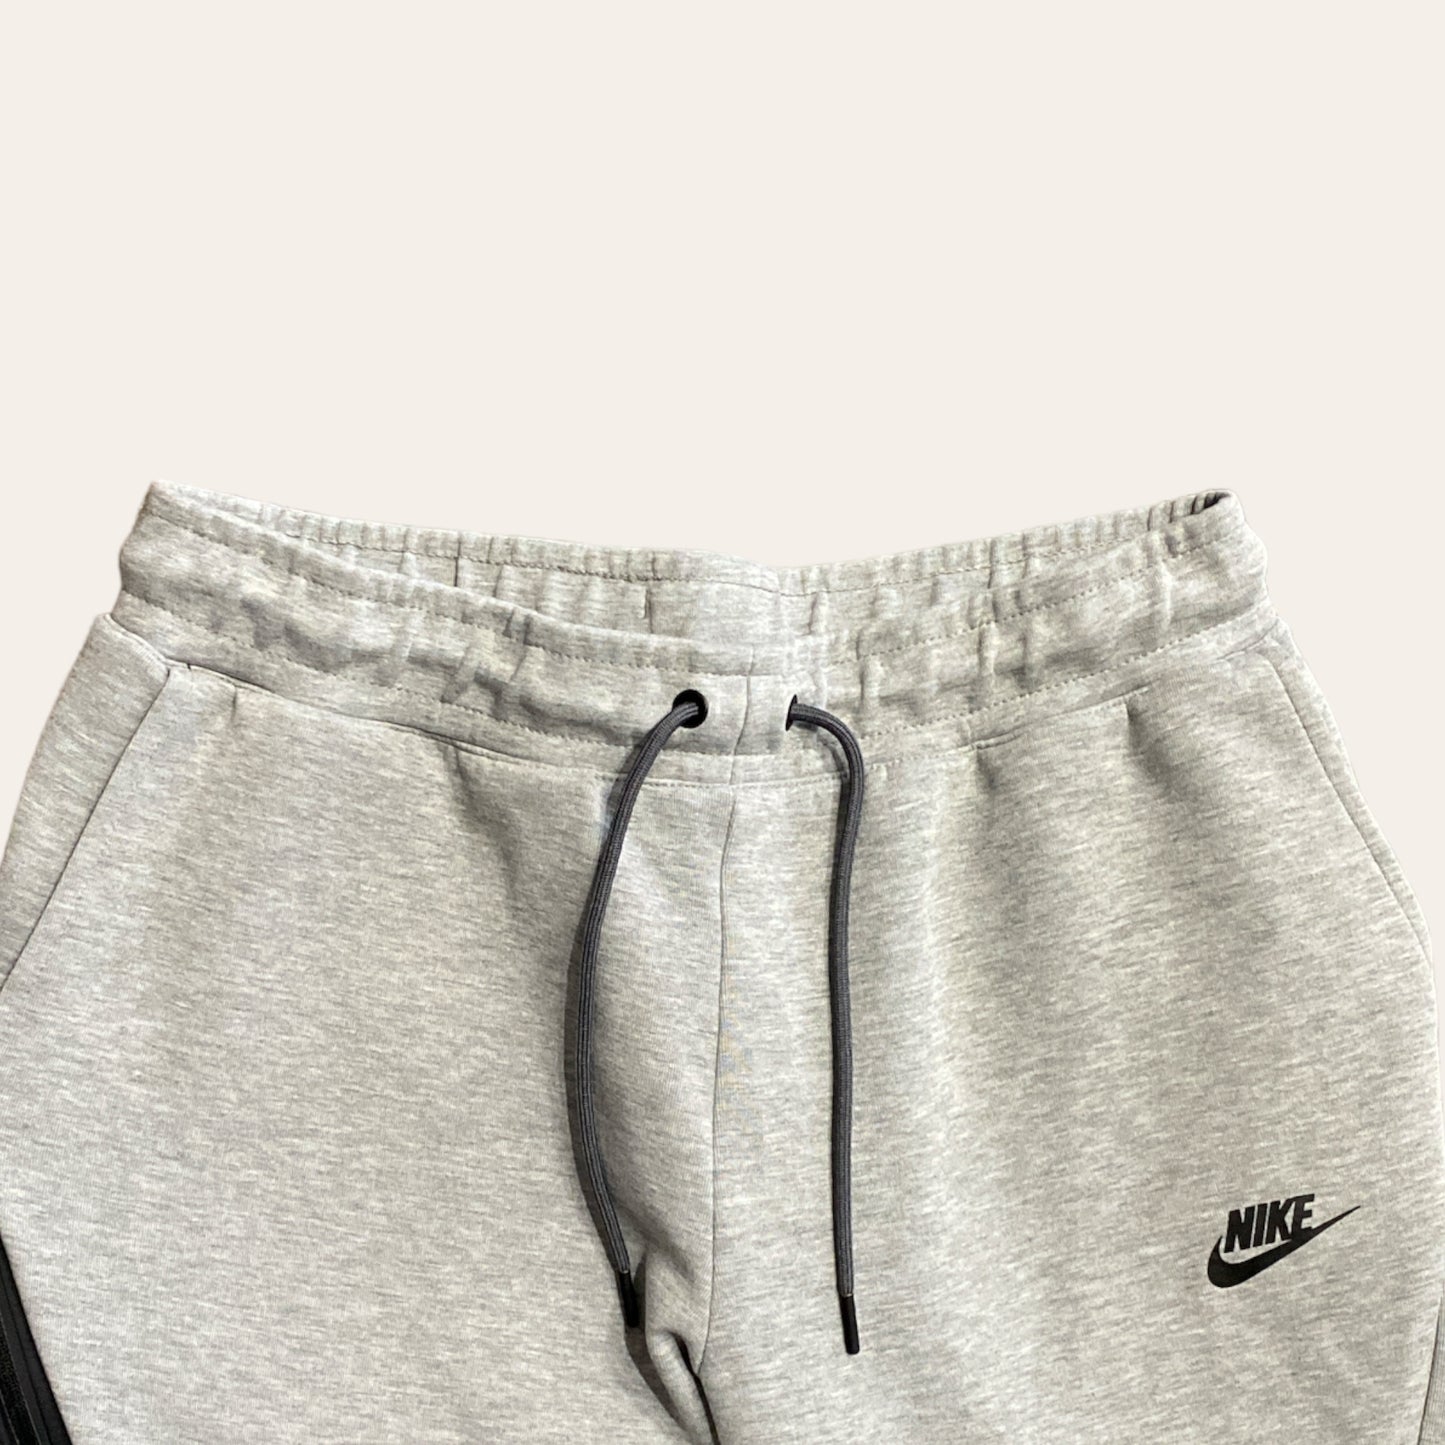 Nike Tech Fleece Sweatpants Grey Size M